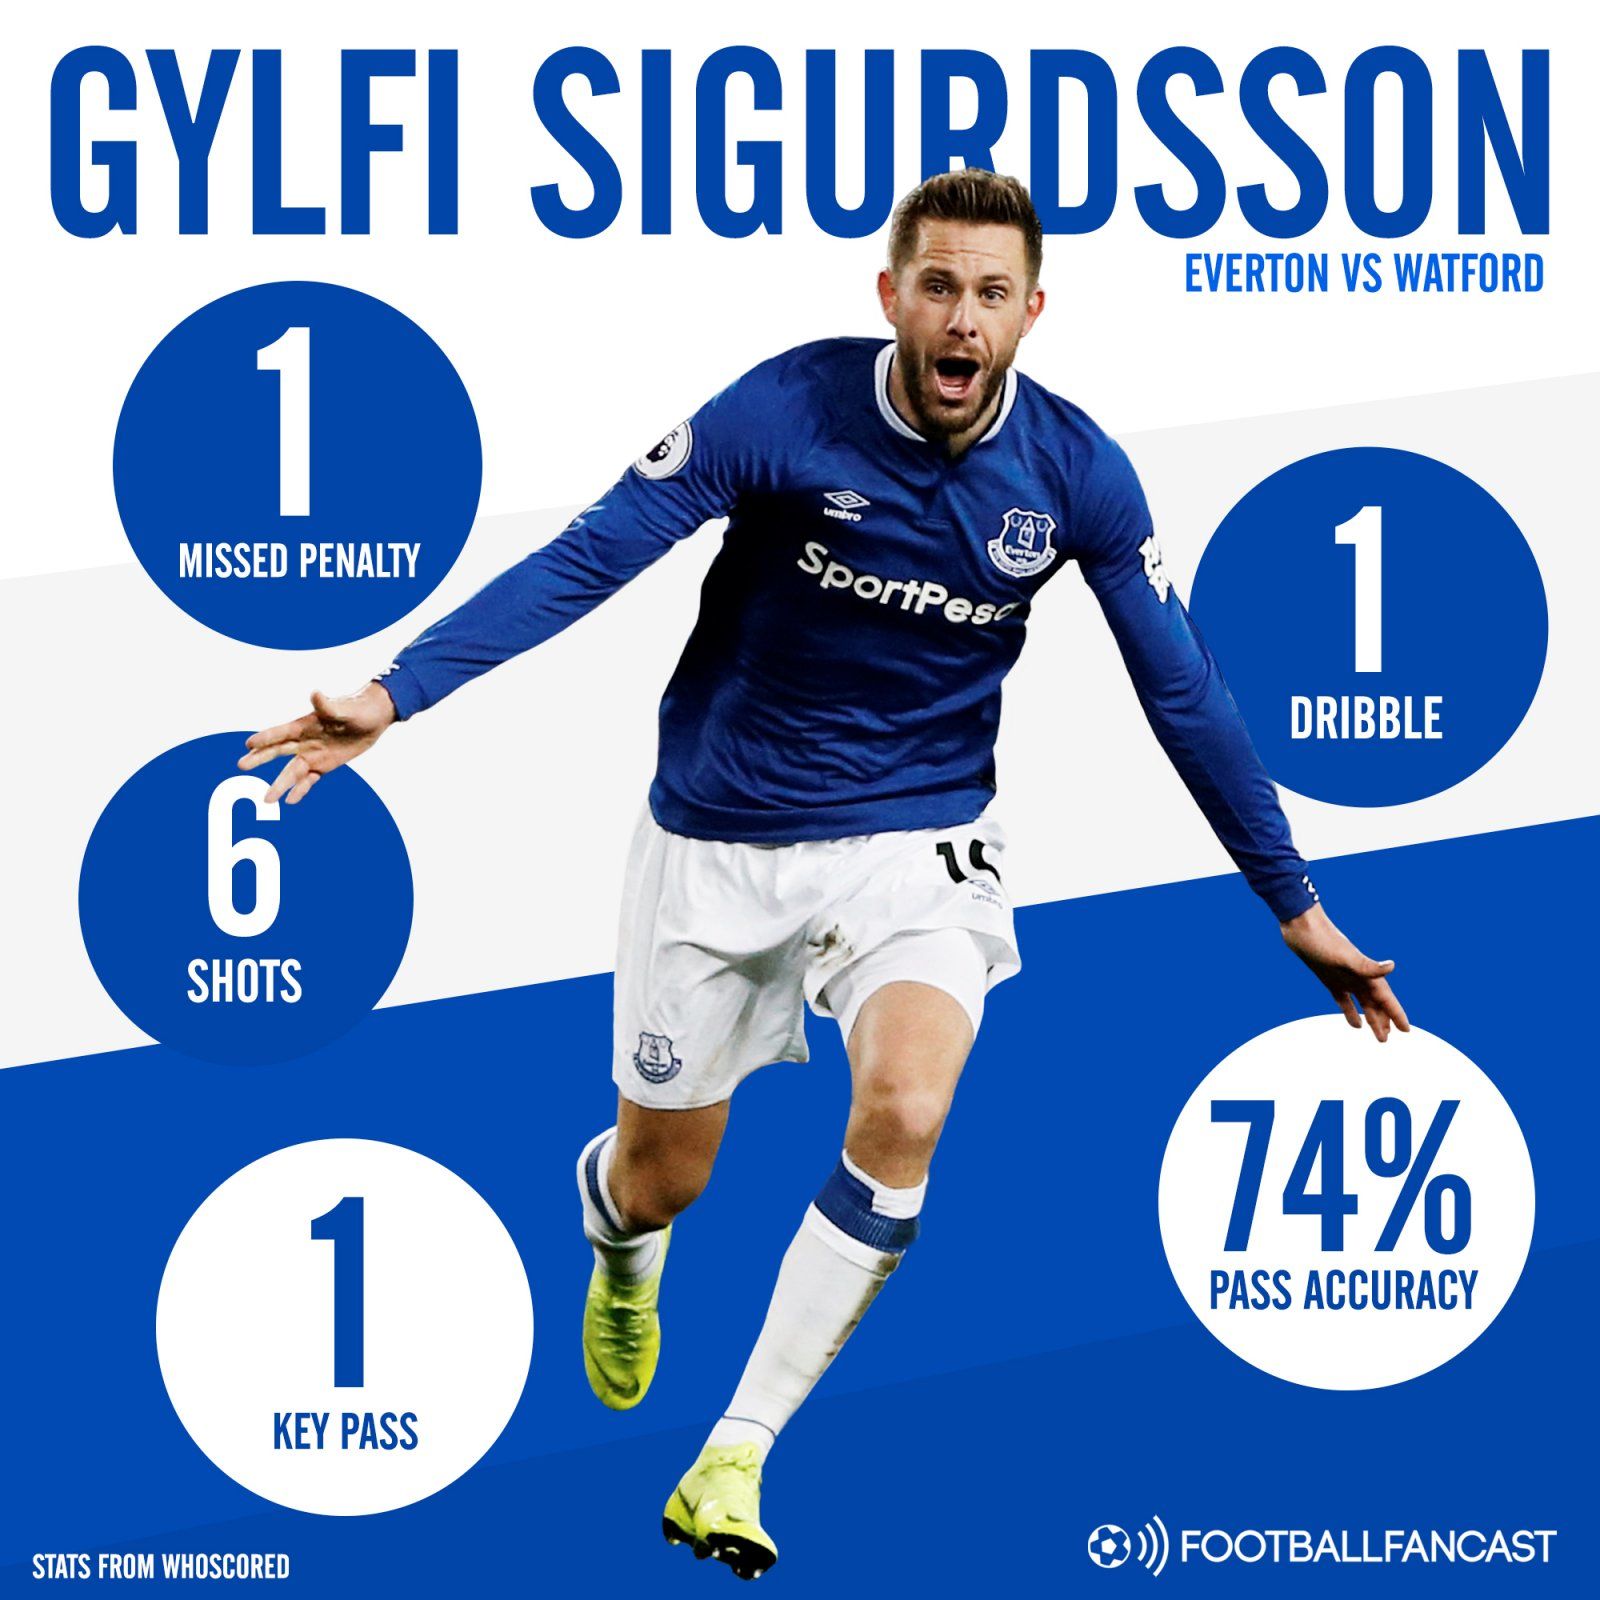 Gylfi Sigurdsson's stats vs Watford